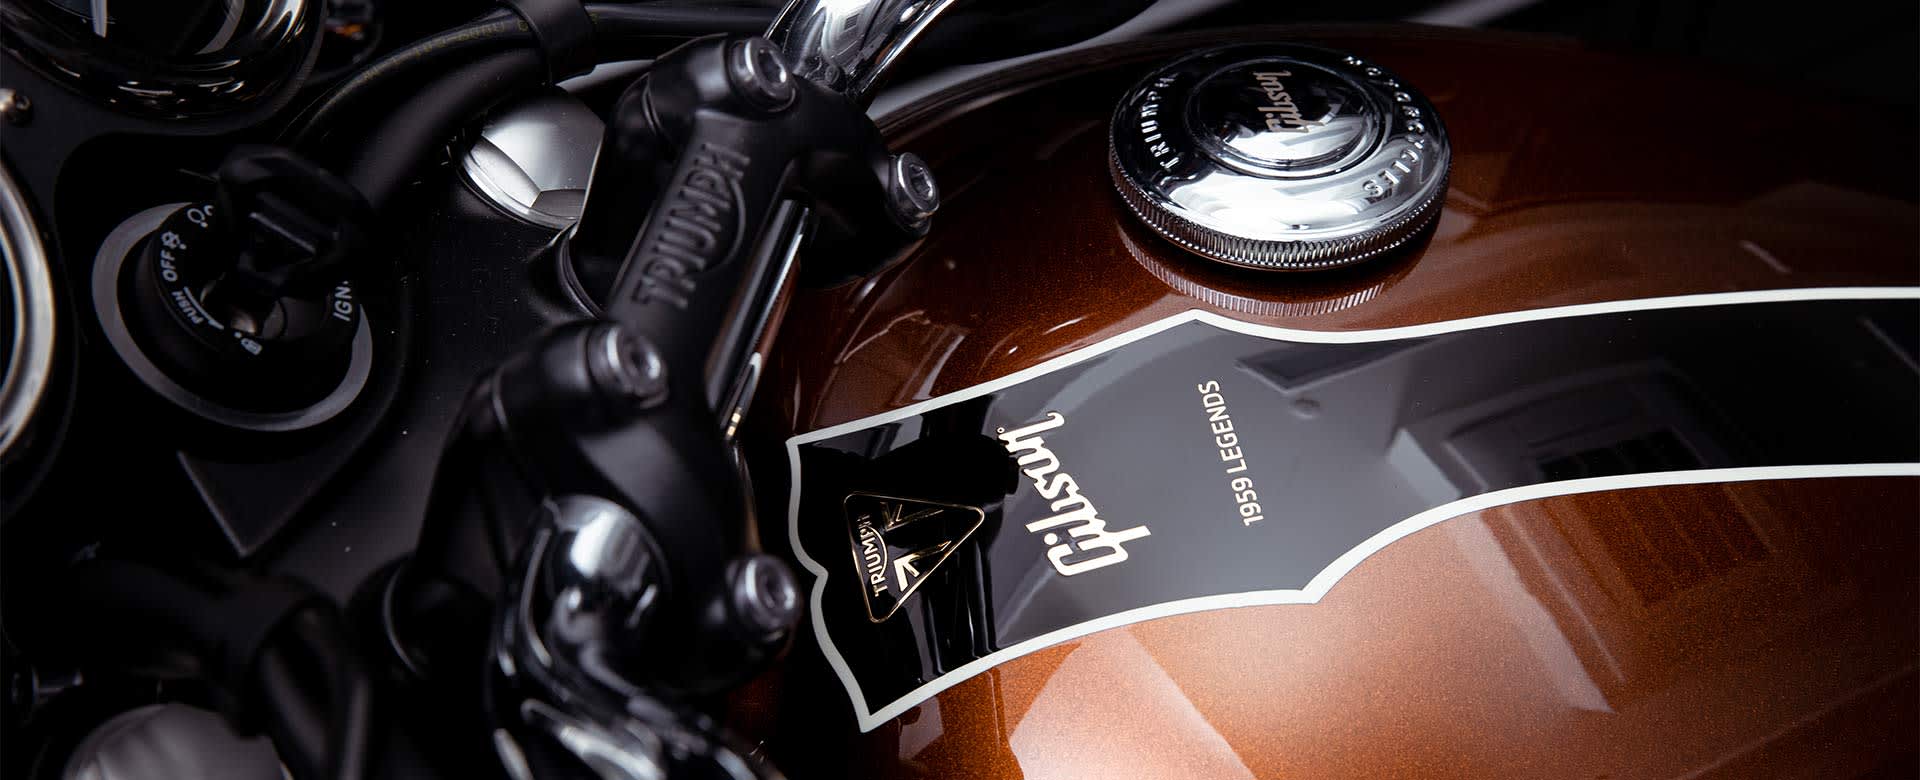 Triumph Motorcycles Bonneville T120 and Gibson custom scheme